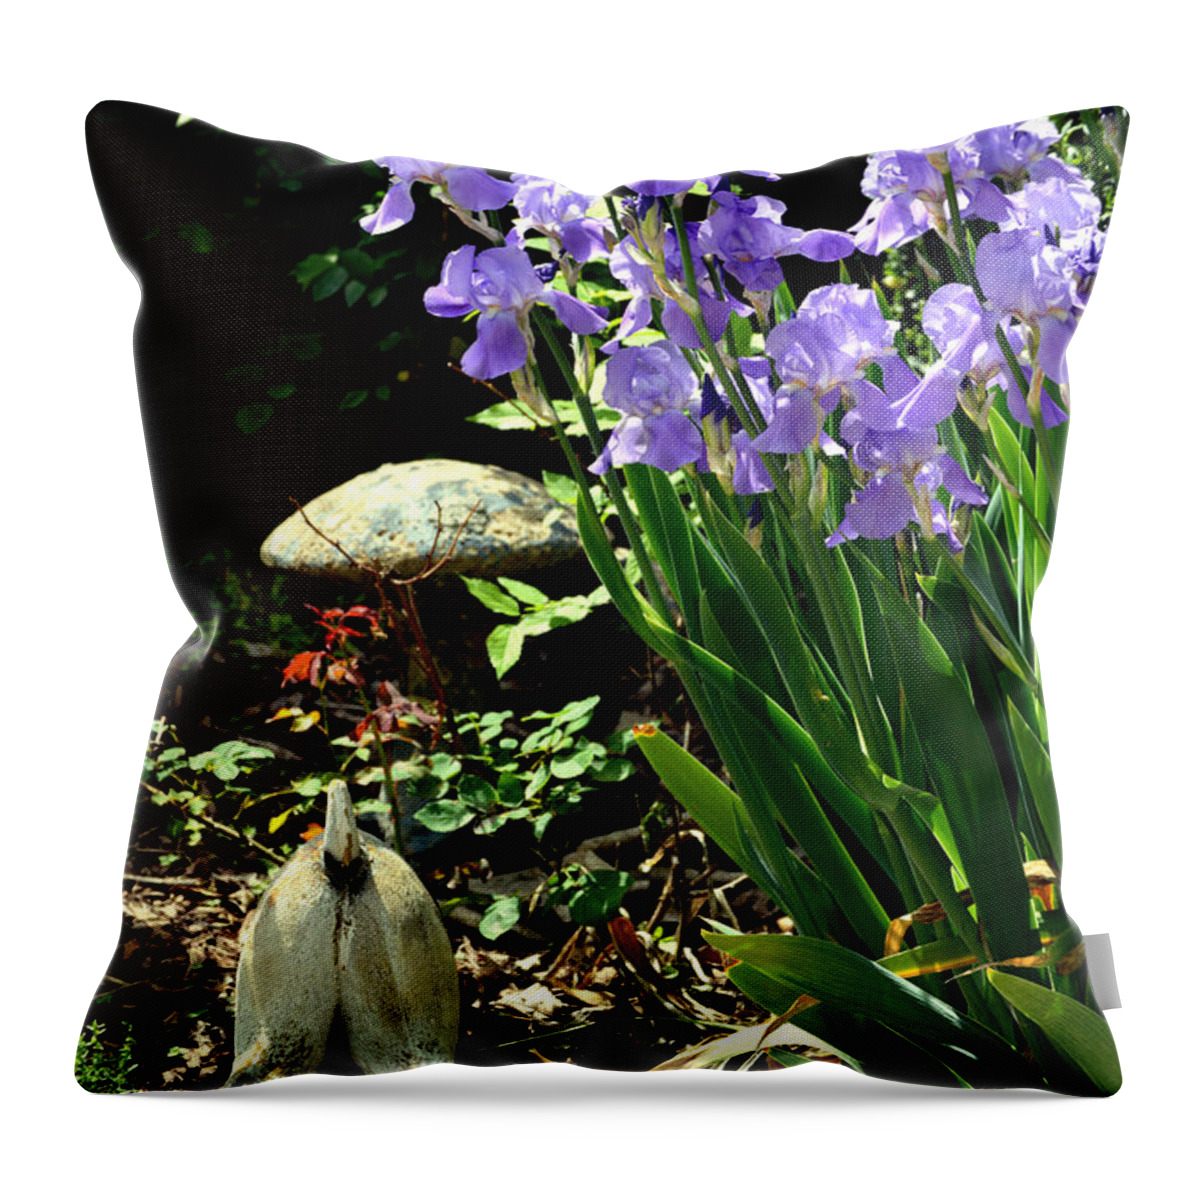 Iris Throw Pillow featuring the photograph Digging Iris Bulbs by Lesa Fine